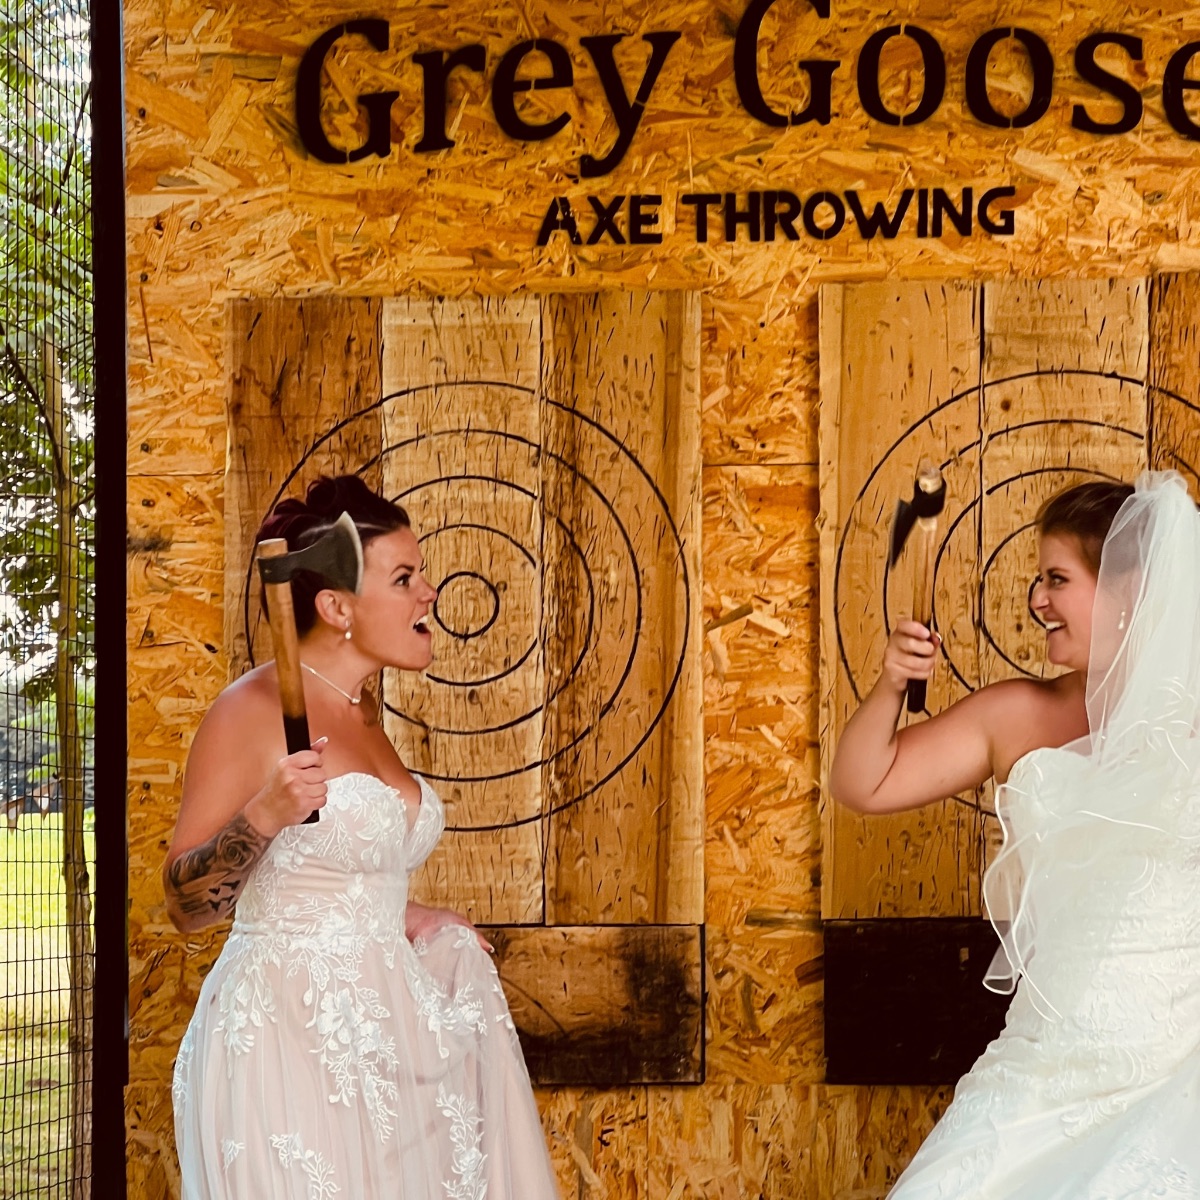 Grey Goose Axe Throwing-Image-69